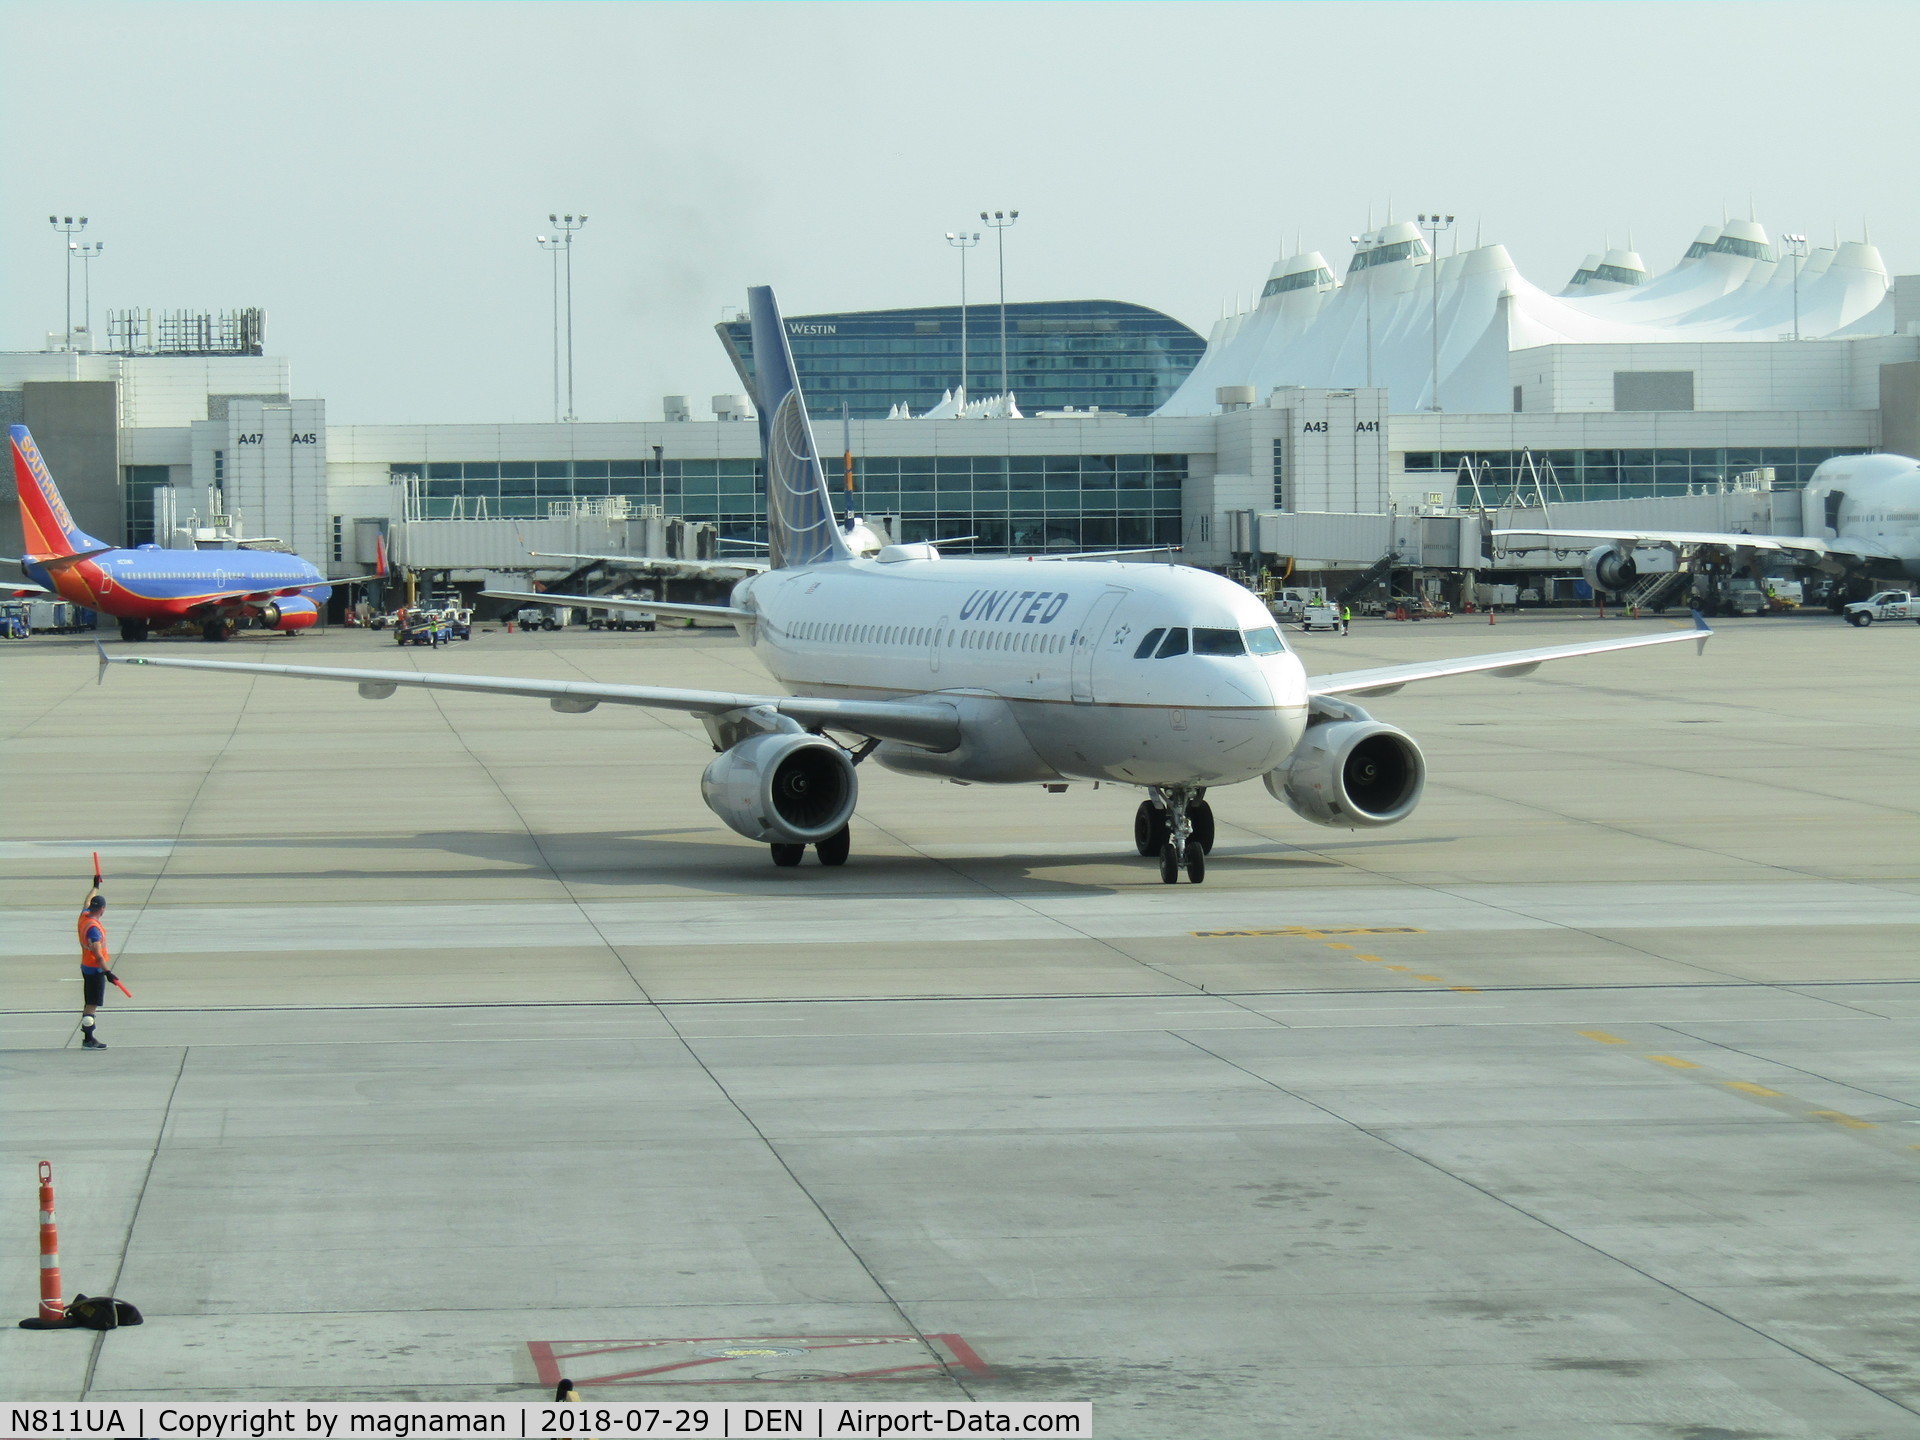 N811UA, 1998 Airbus A319-131 C/N 847, just landed at DEN